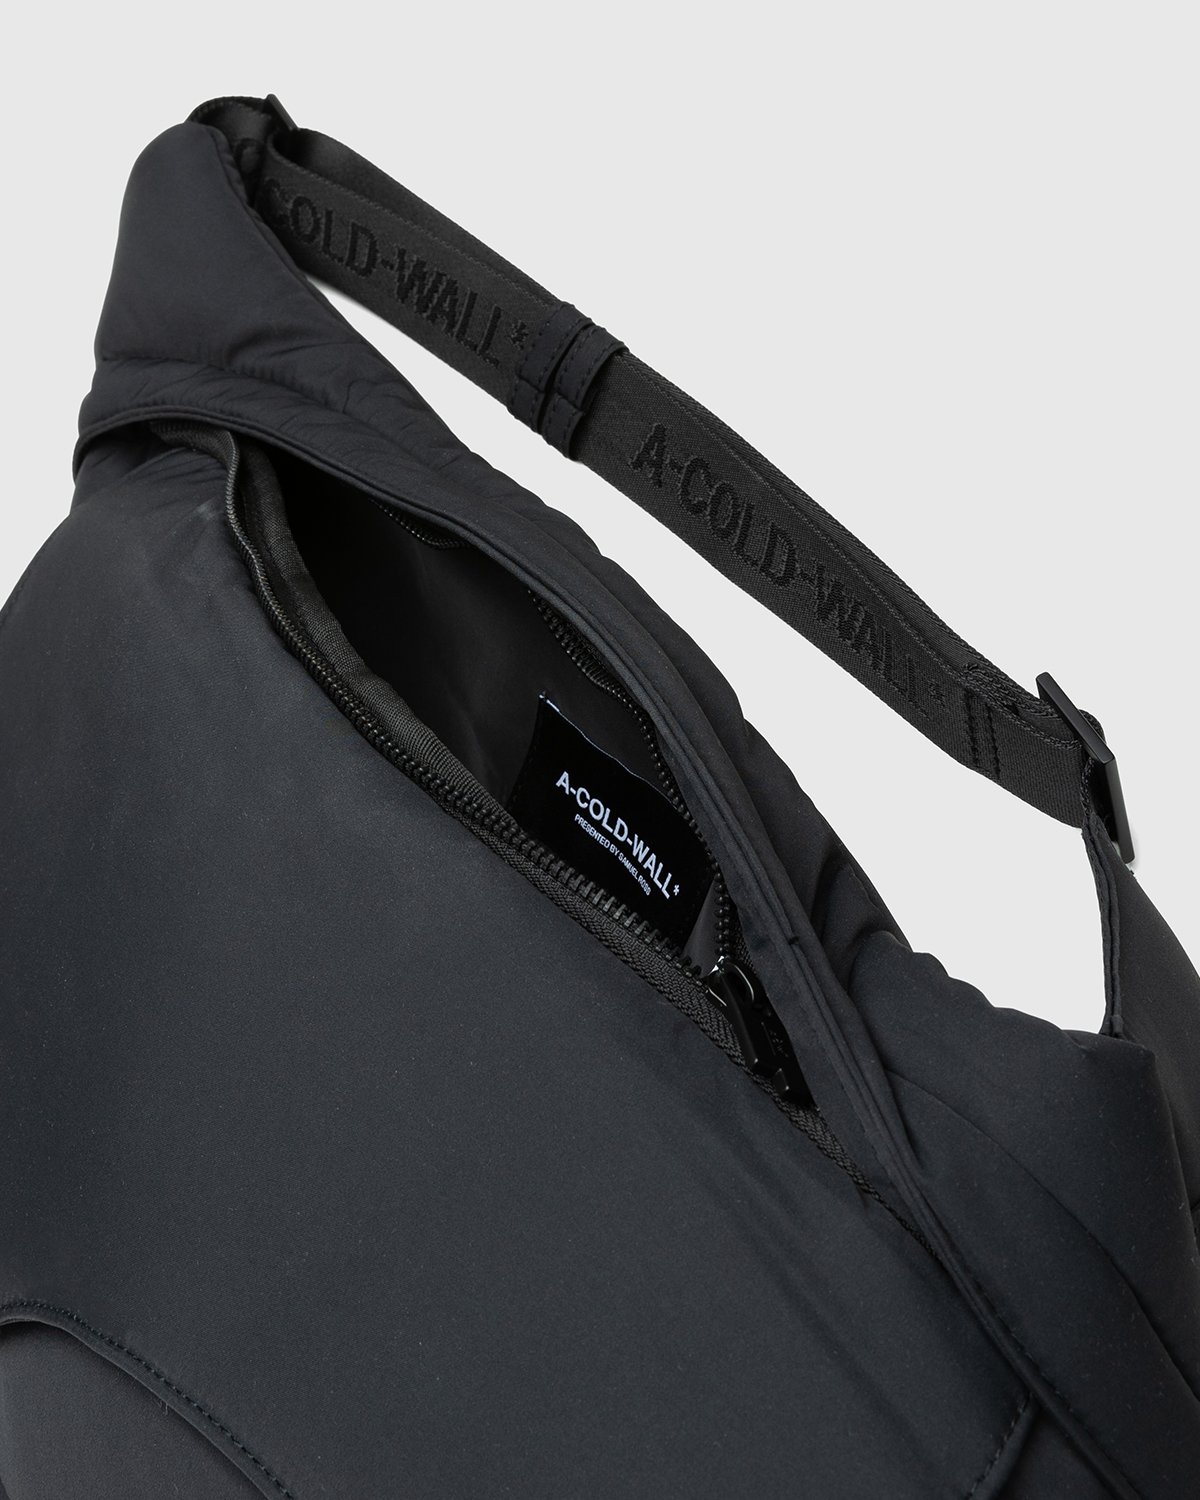 A-Cold-Wall* - Semi Gilet Body Bag Black - Accessories - Black - Image 3